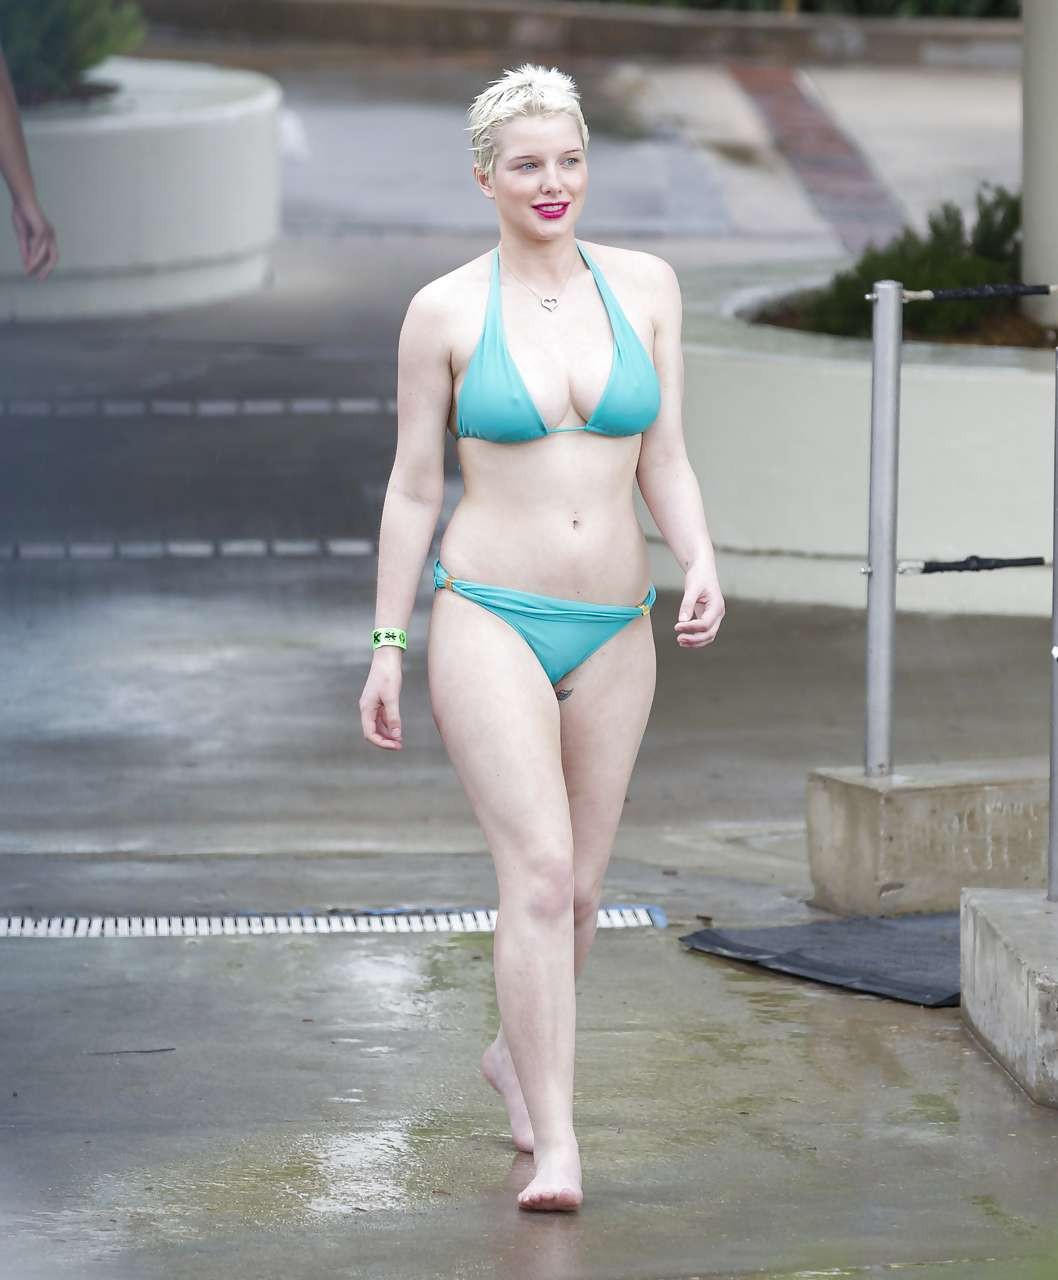 Helen Flanagan hint of nipple slip in blue bikini on beach paparazzi pictures #75294804